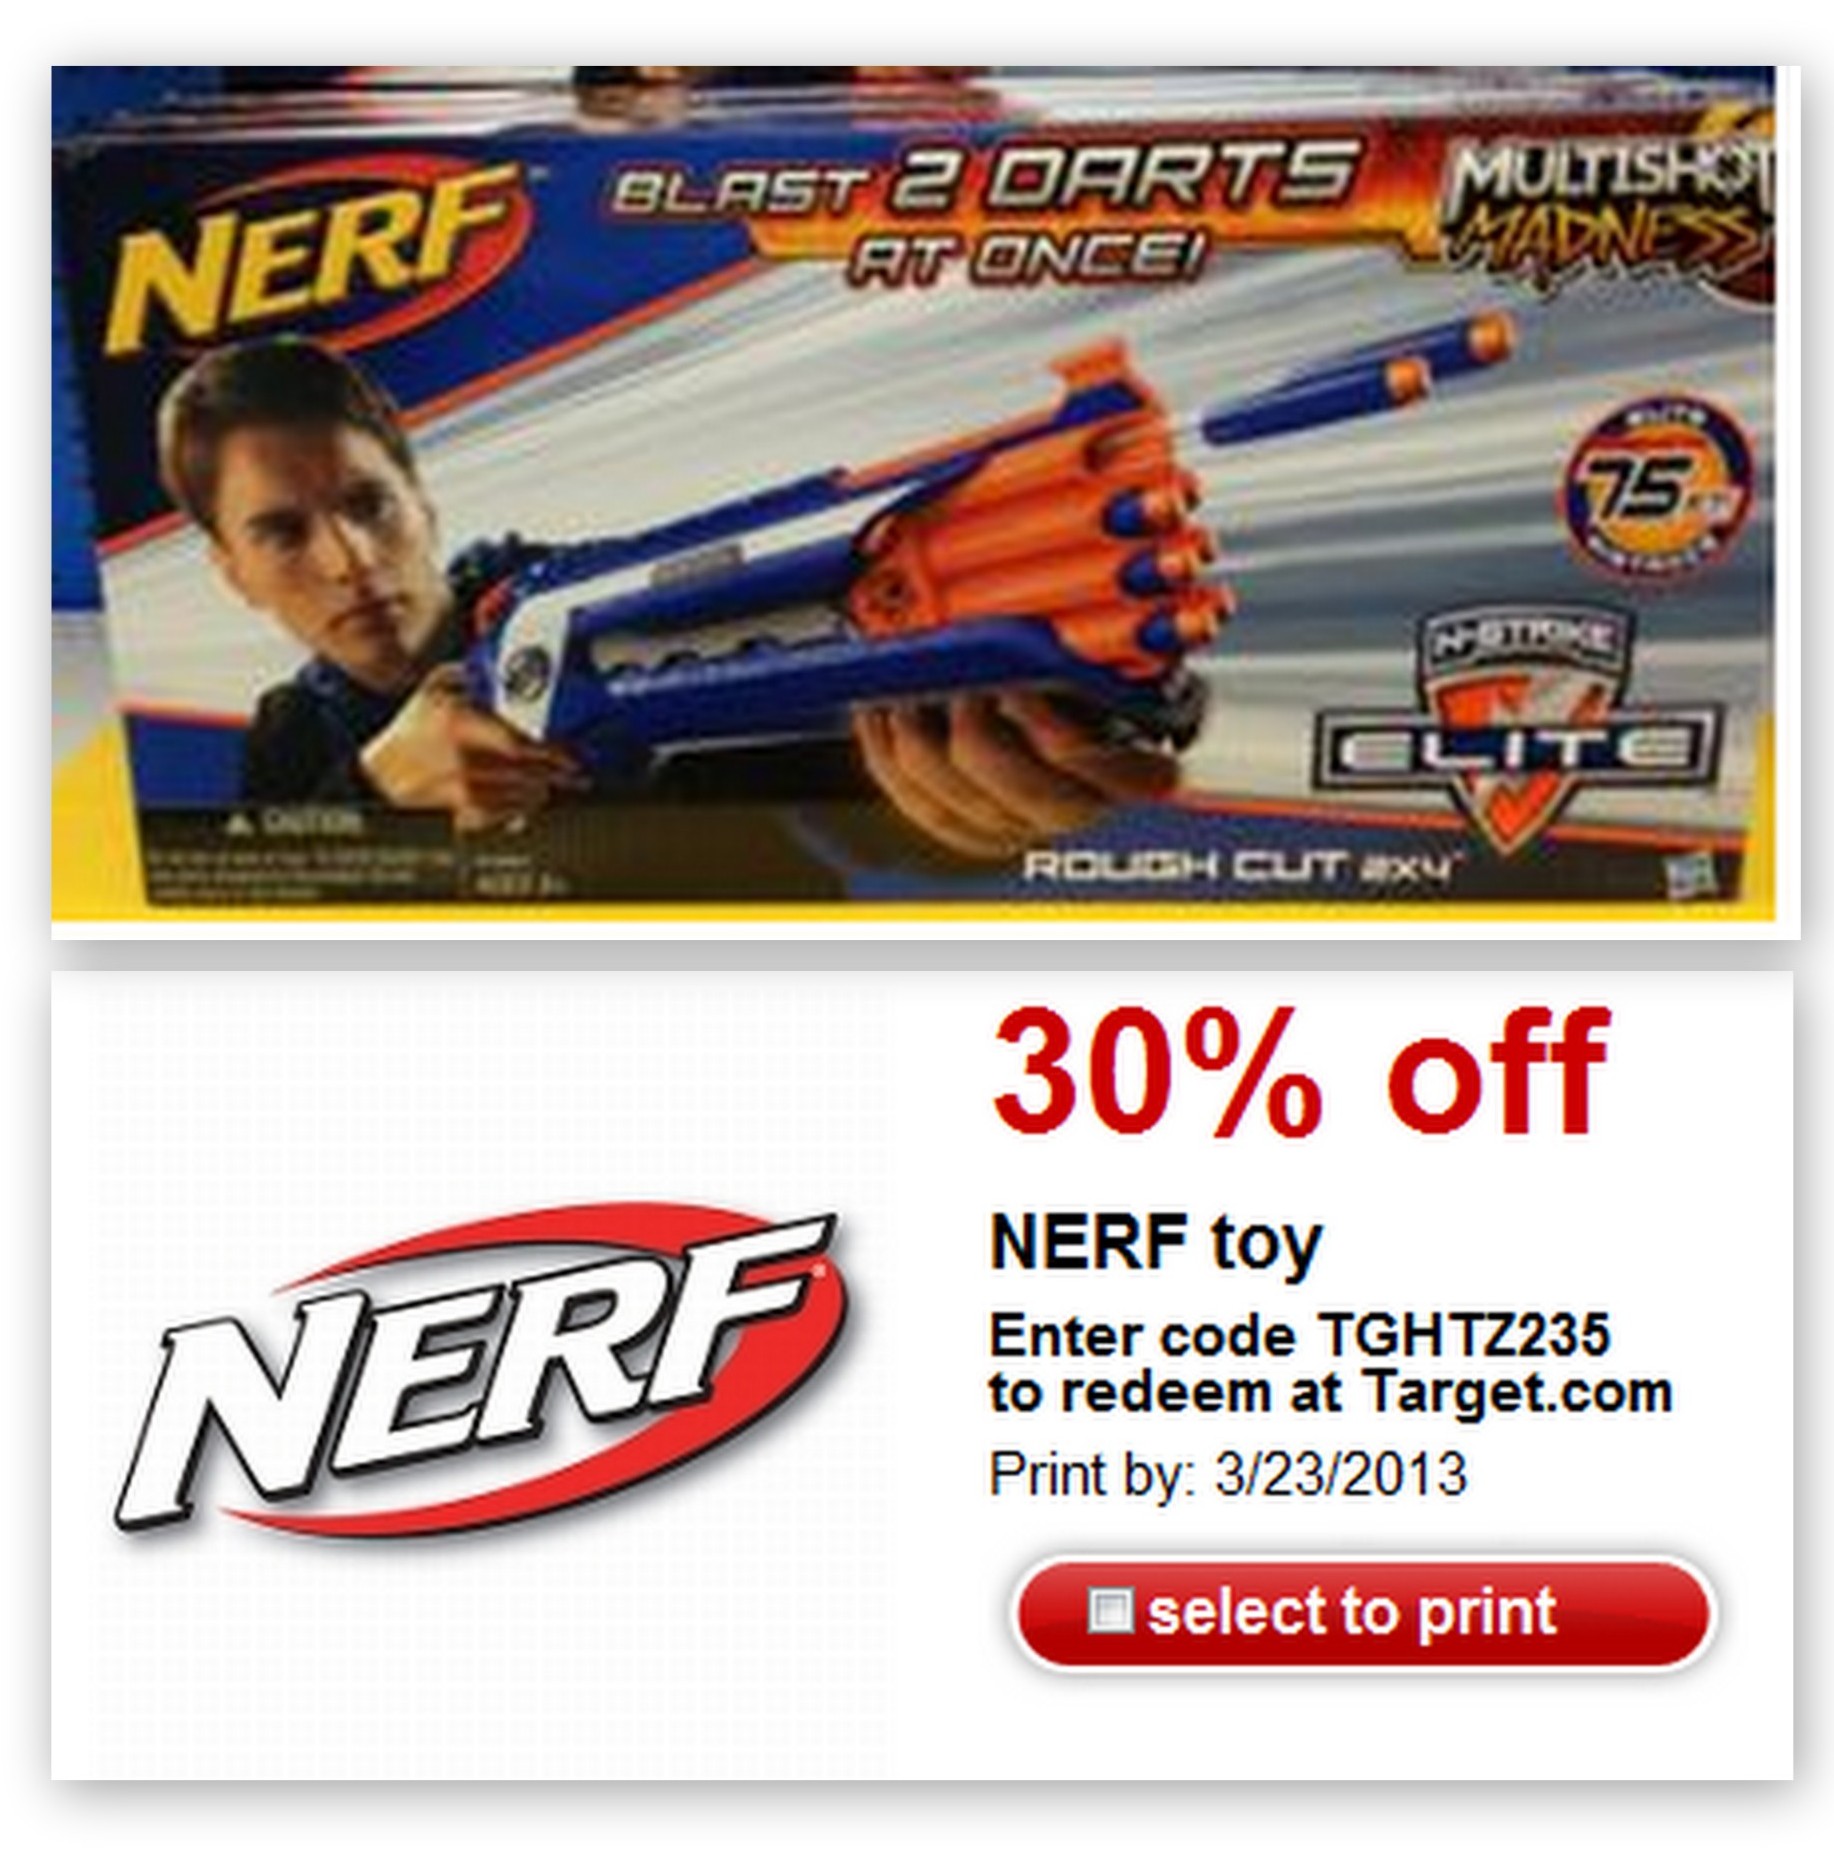 Nerf Vortex or Nerf N Strike For $7.60 After Coupon Stack at Target